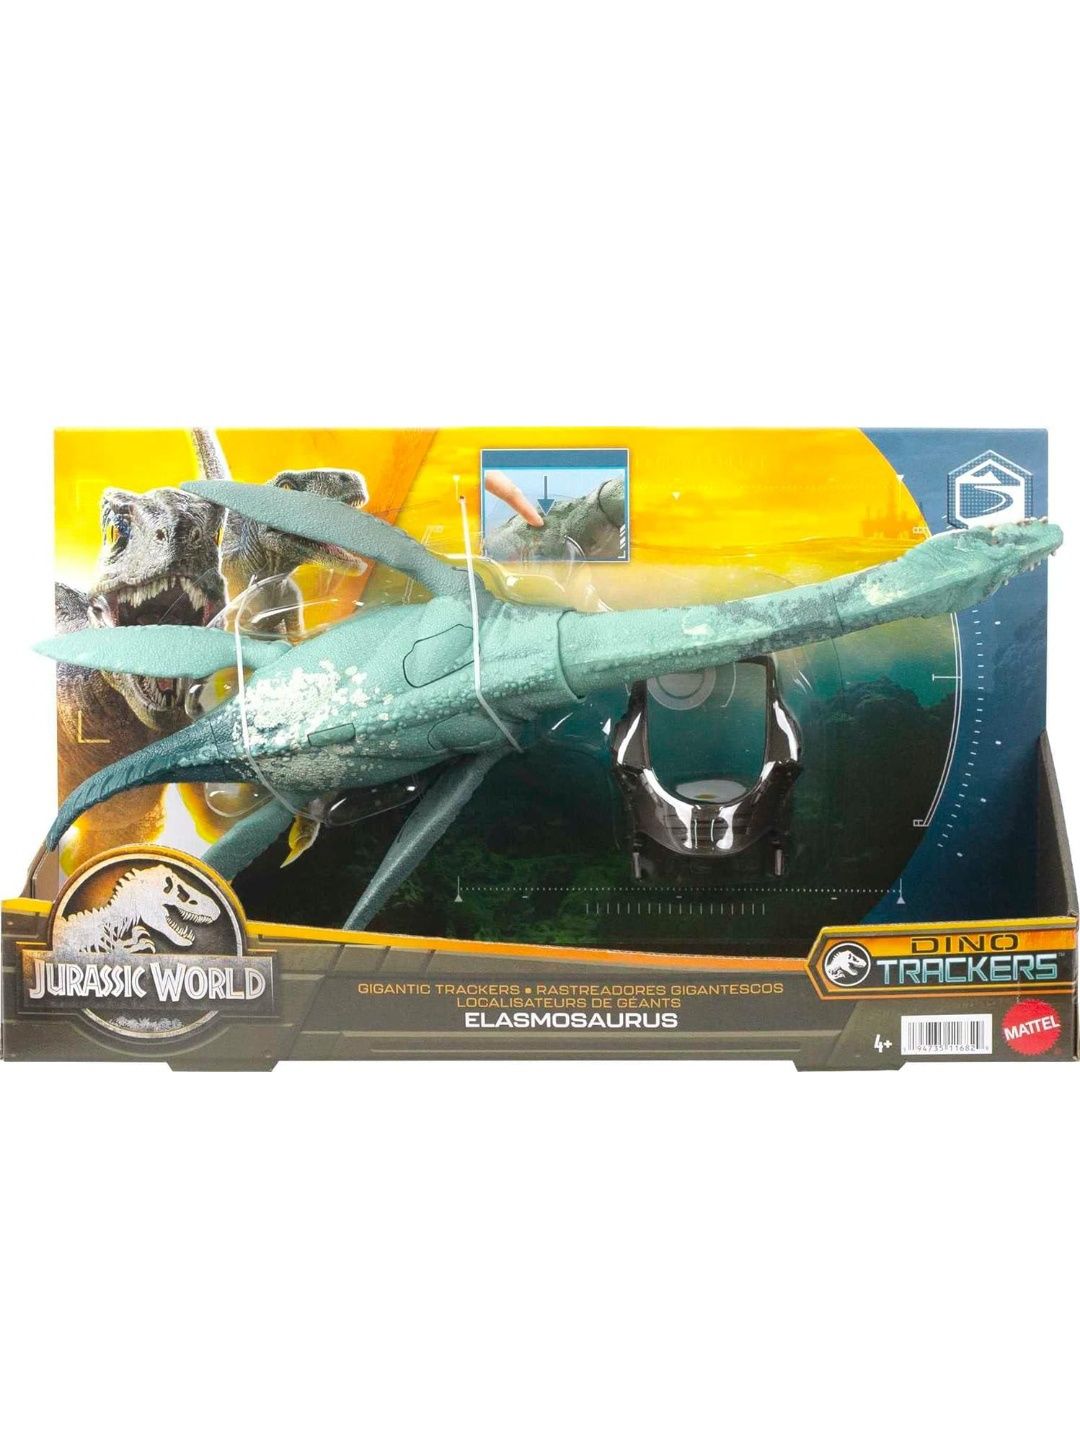 Jurassic World Dinosaur Toy, Elasmosaurus Gigant